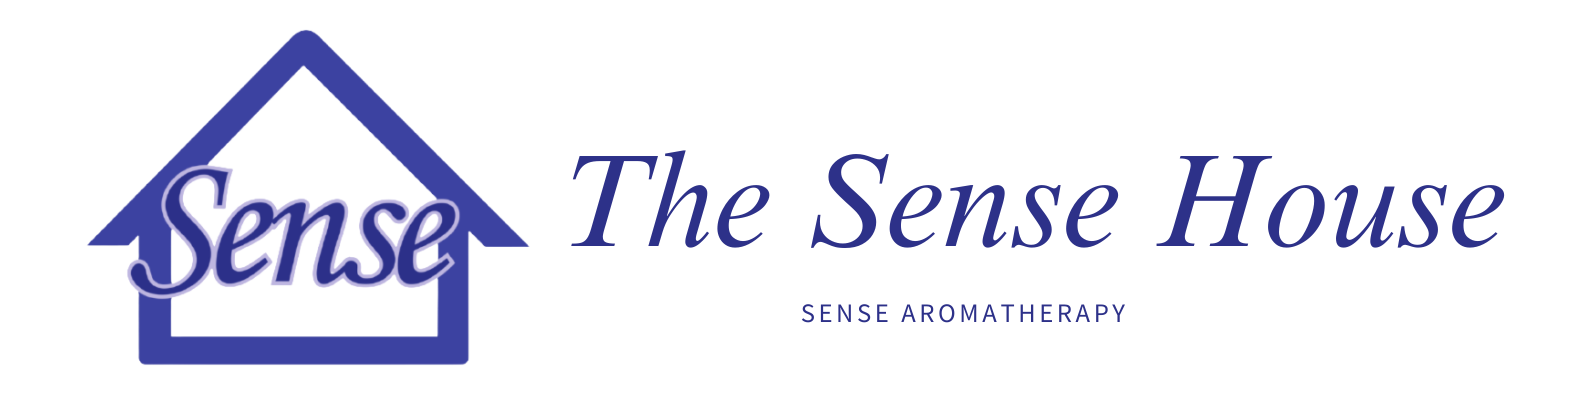 The Sense House 